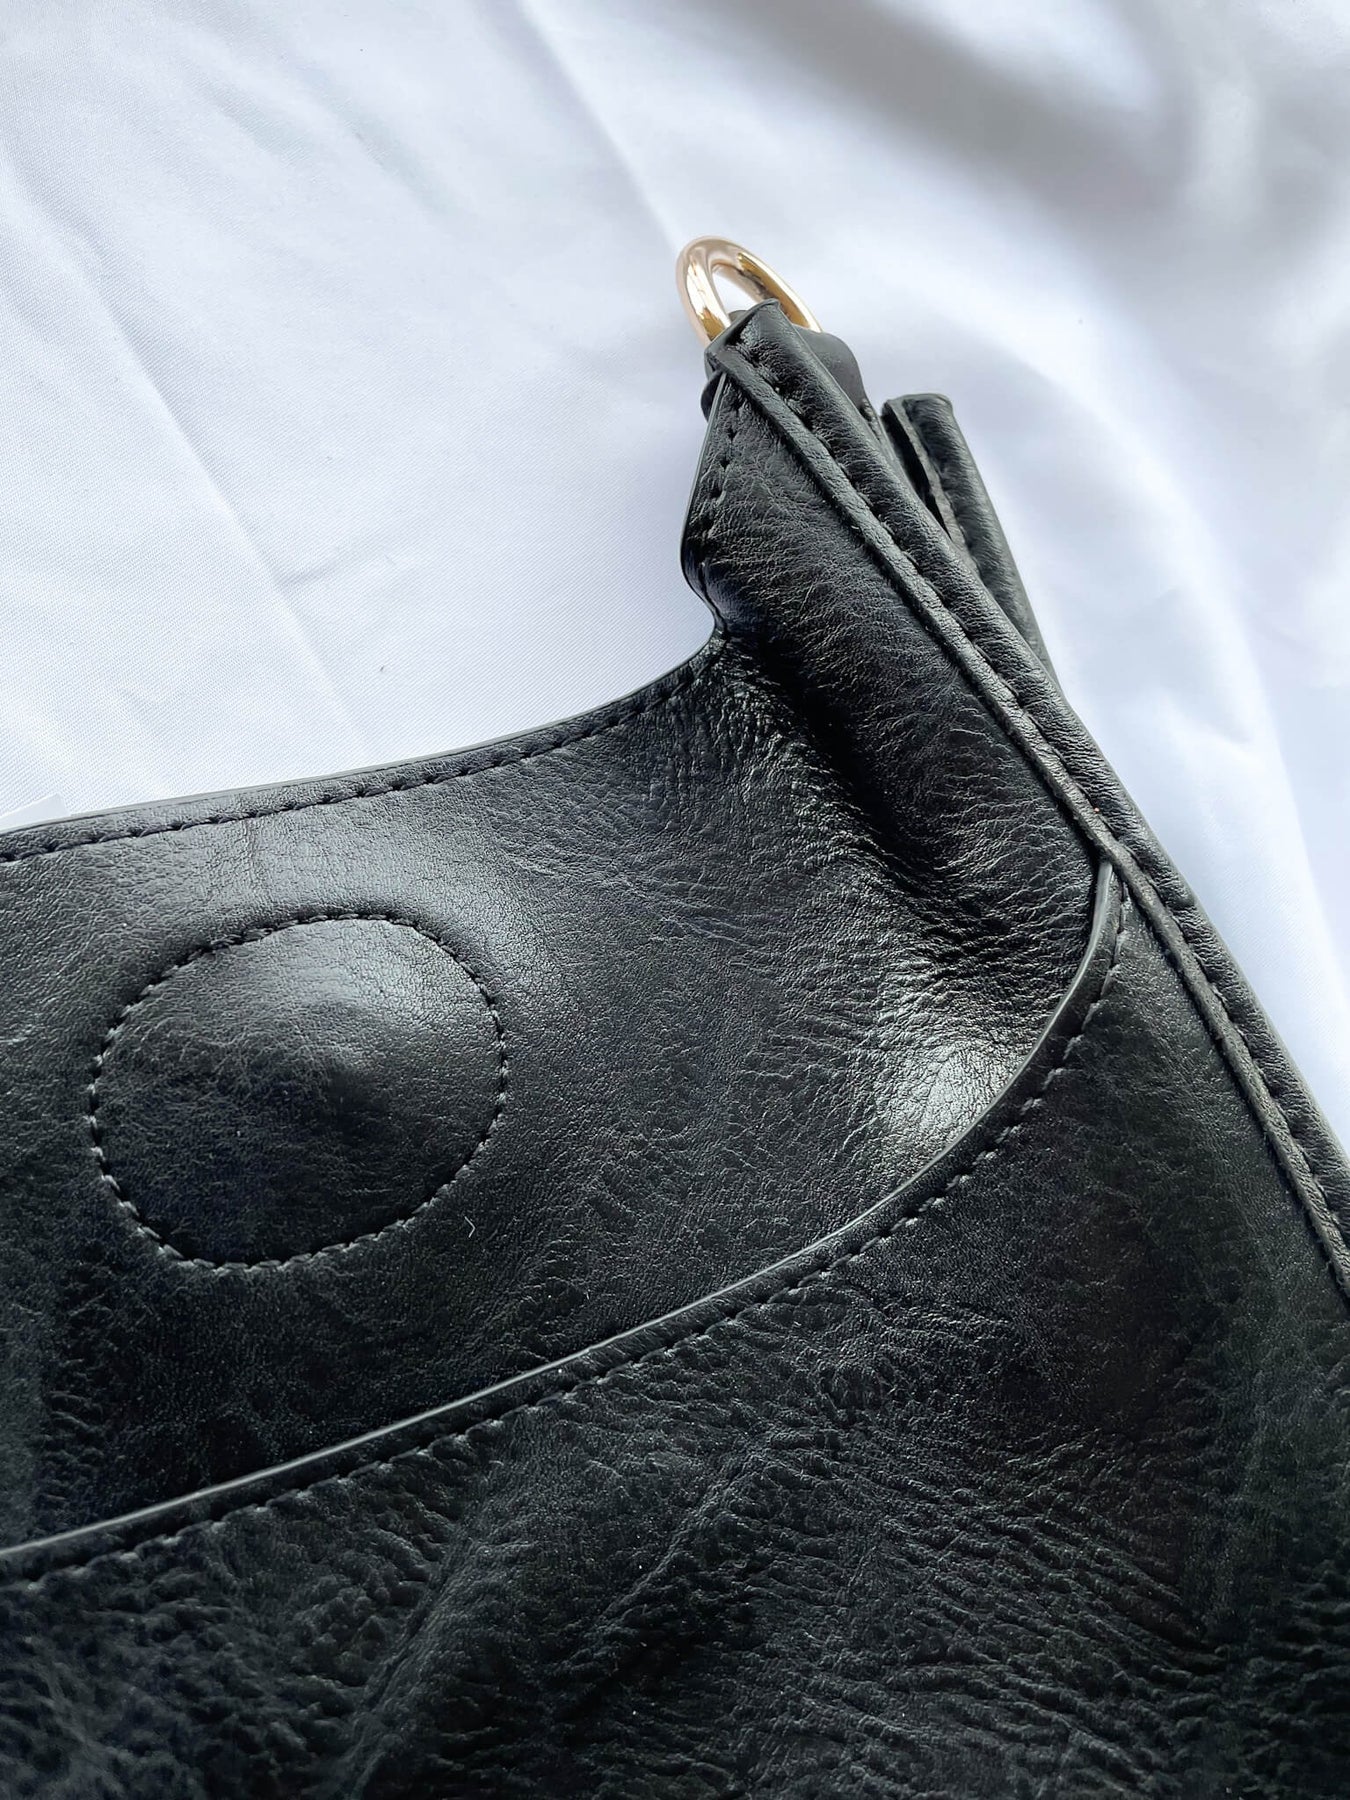 Ahdorned Embroidered Bag Strap - Black/Cream/Khaki/Cranberry (Gold Har -  Her Hide Out